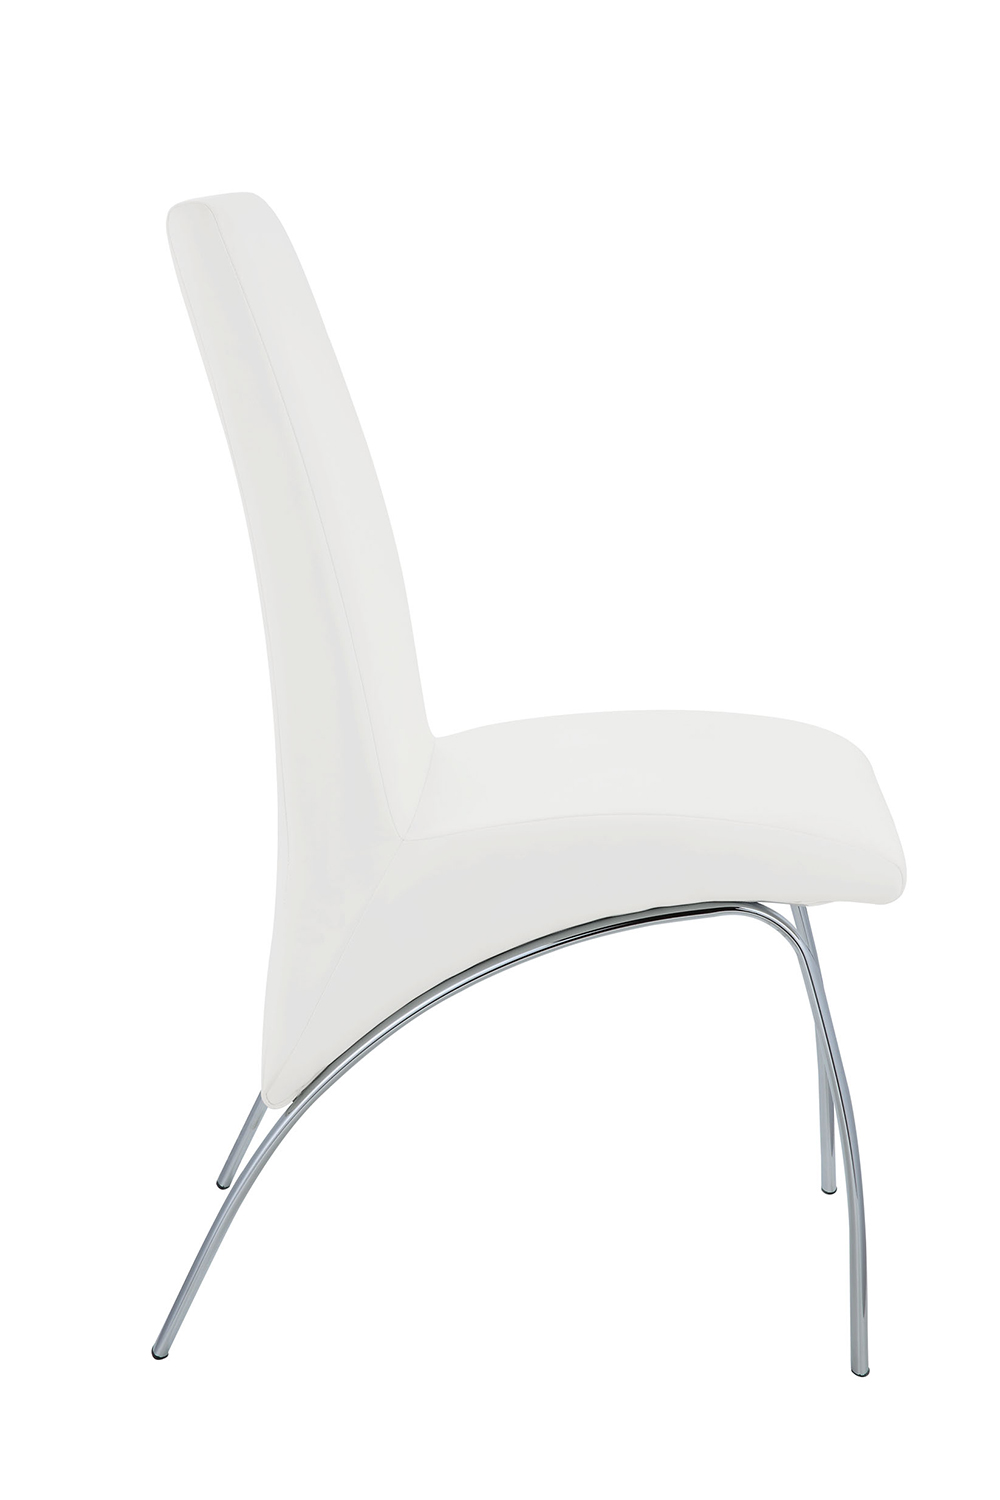 Acme Pervis Side Chair - White Vinyl/Chrome